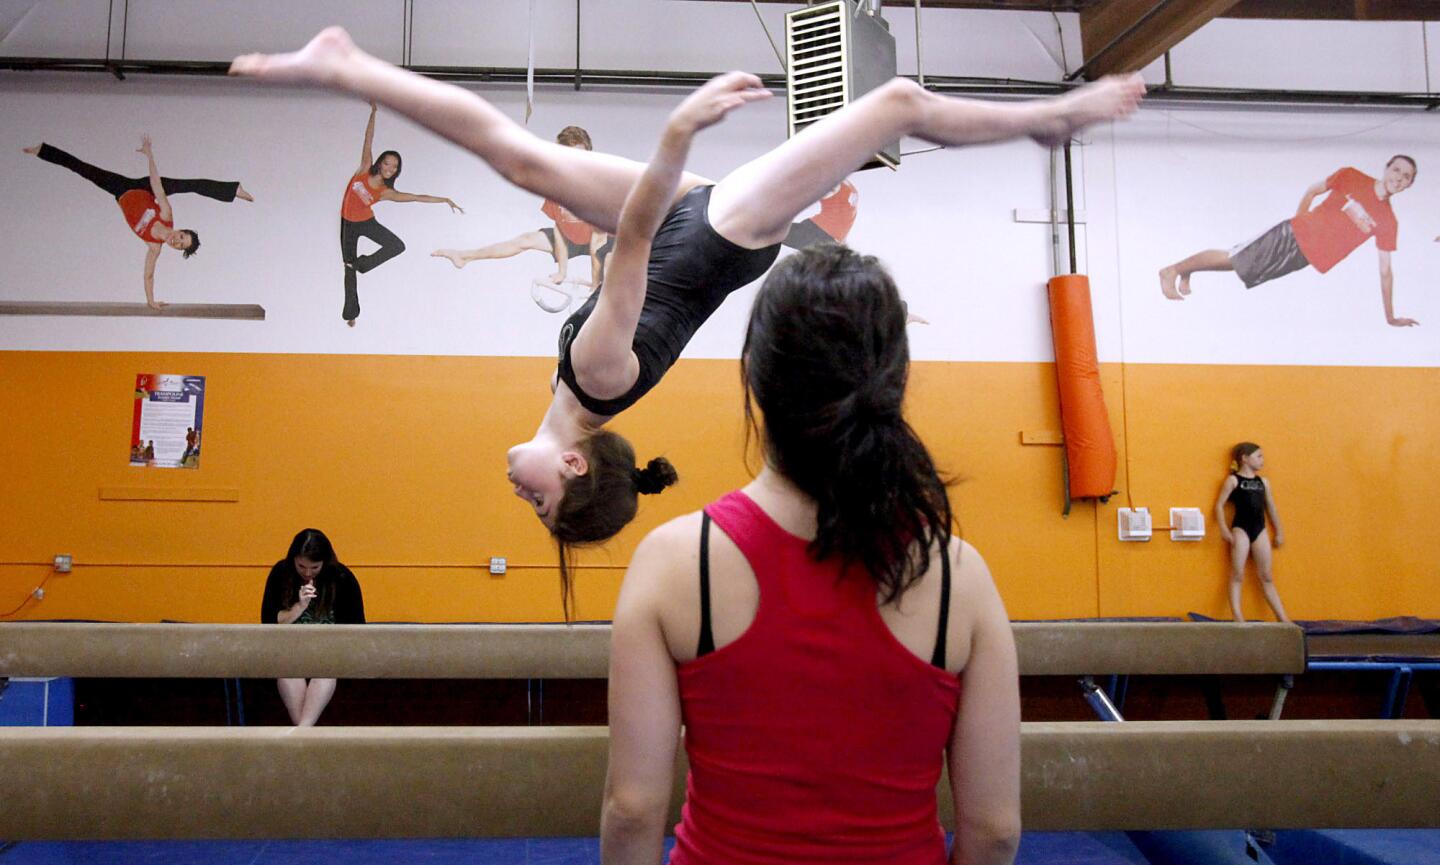 Photo Gallery: Golden State Gymnastics champions hard work that pays off